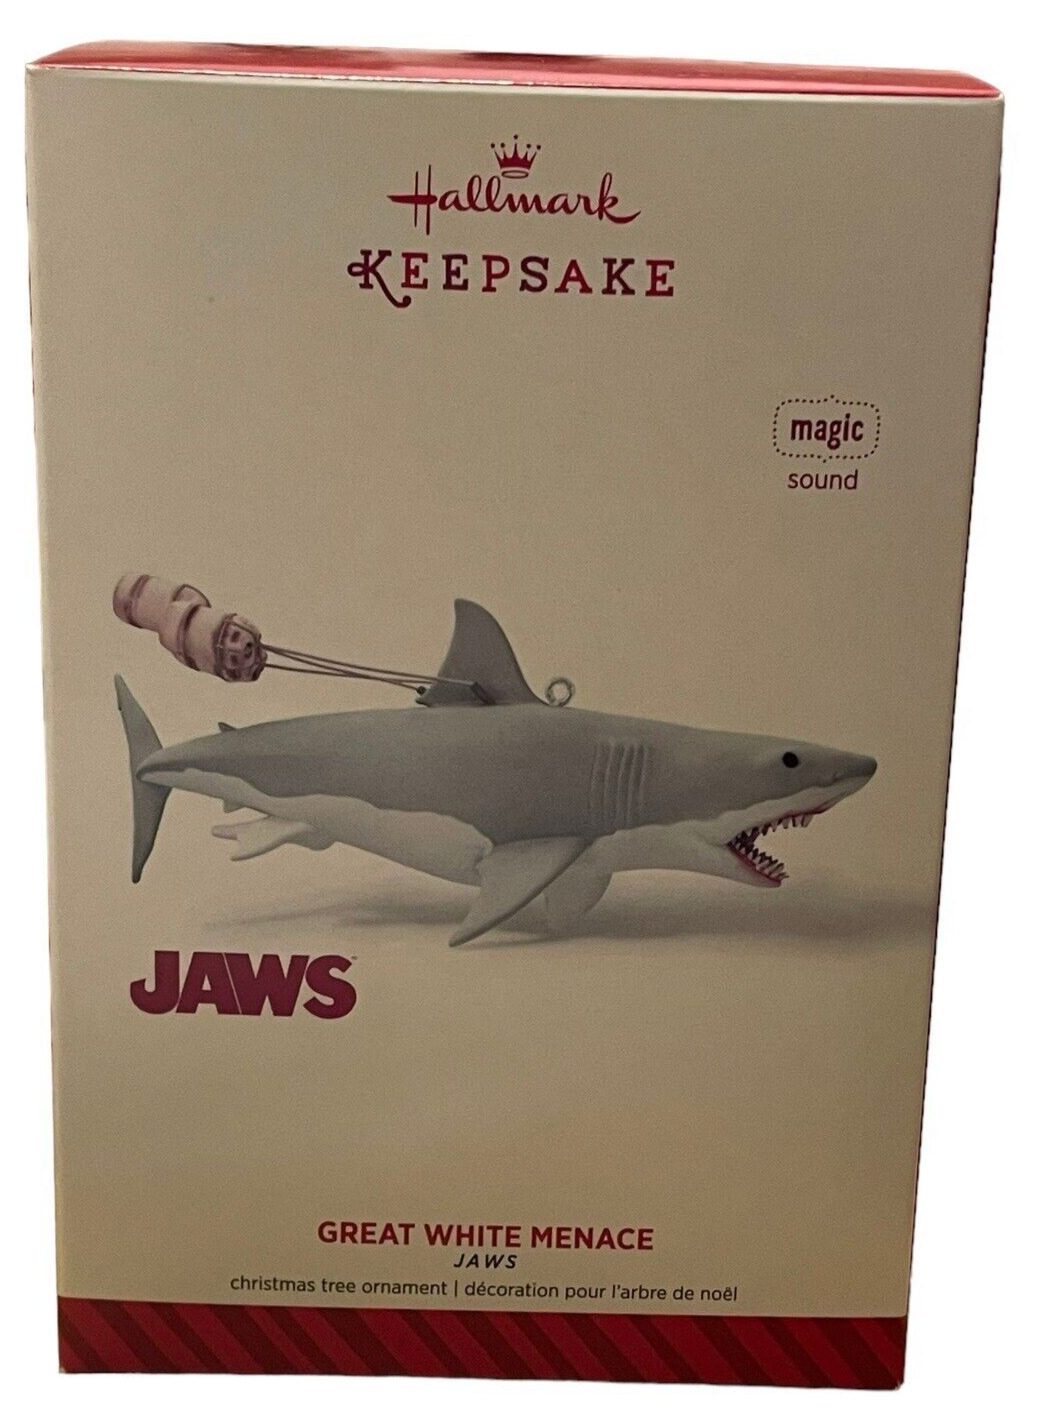 Hallmark Jaws Great White Menace Magic Sound New in Box 2014 Complete